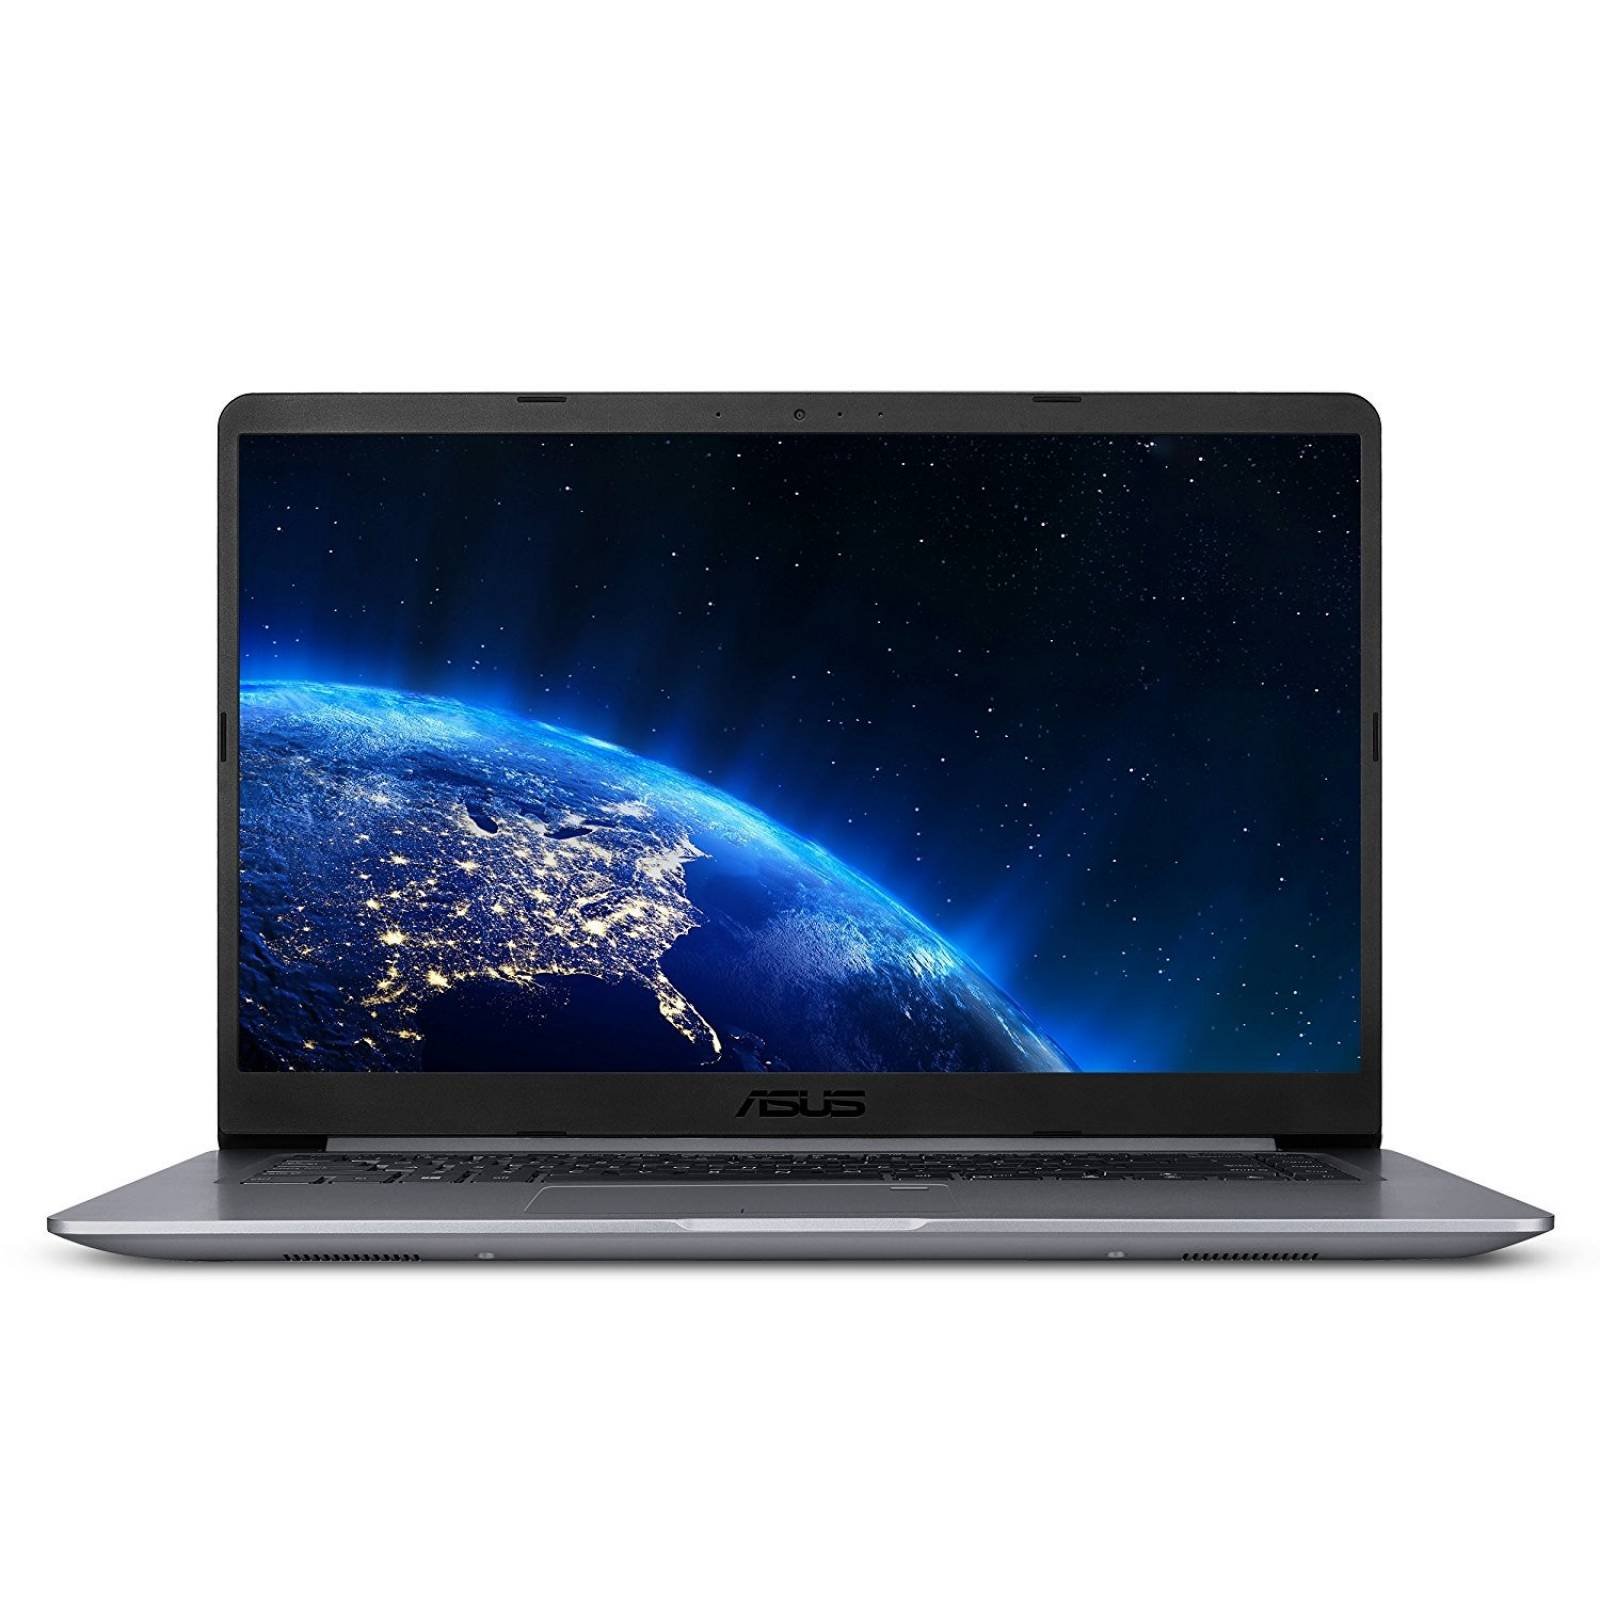 Laptop Asus VivoBook F510UA 15.6'' i5-8250U 1TB HDD 8GB RAM